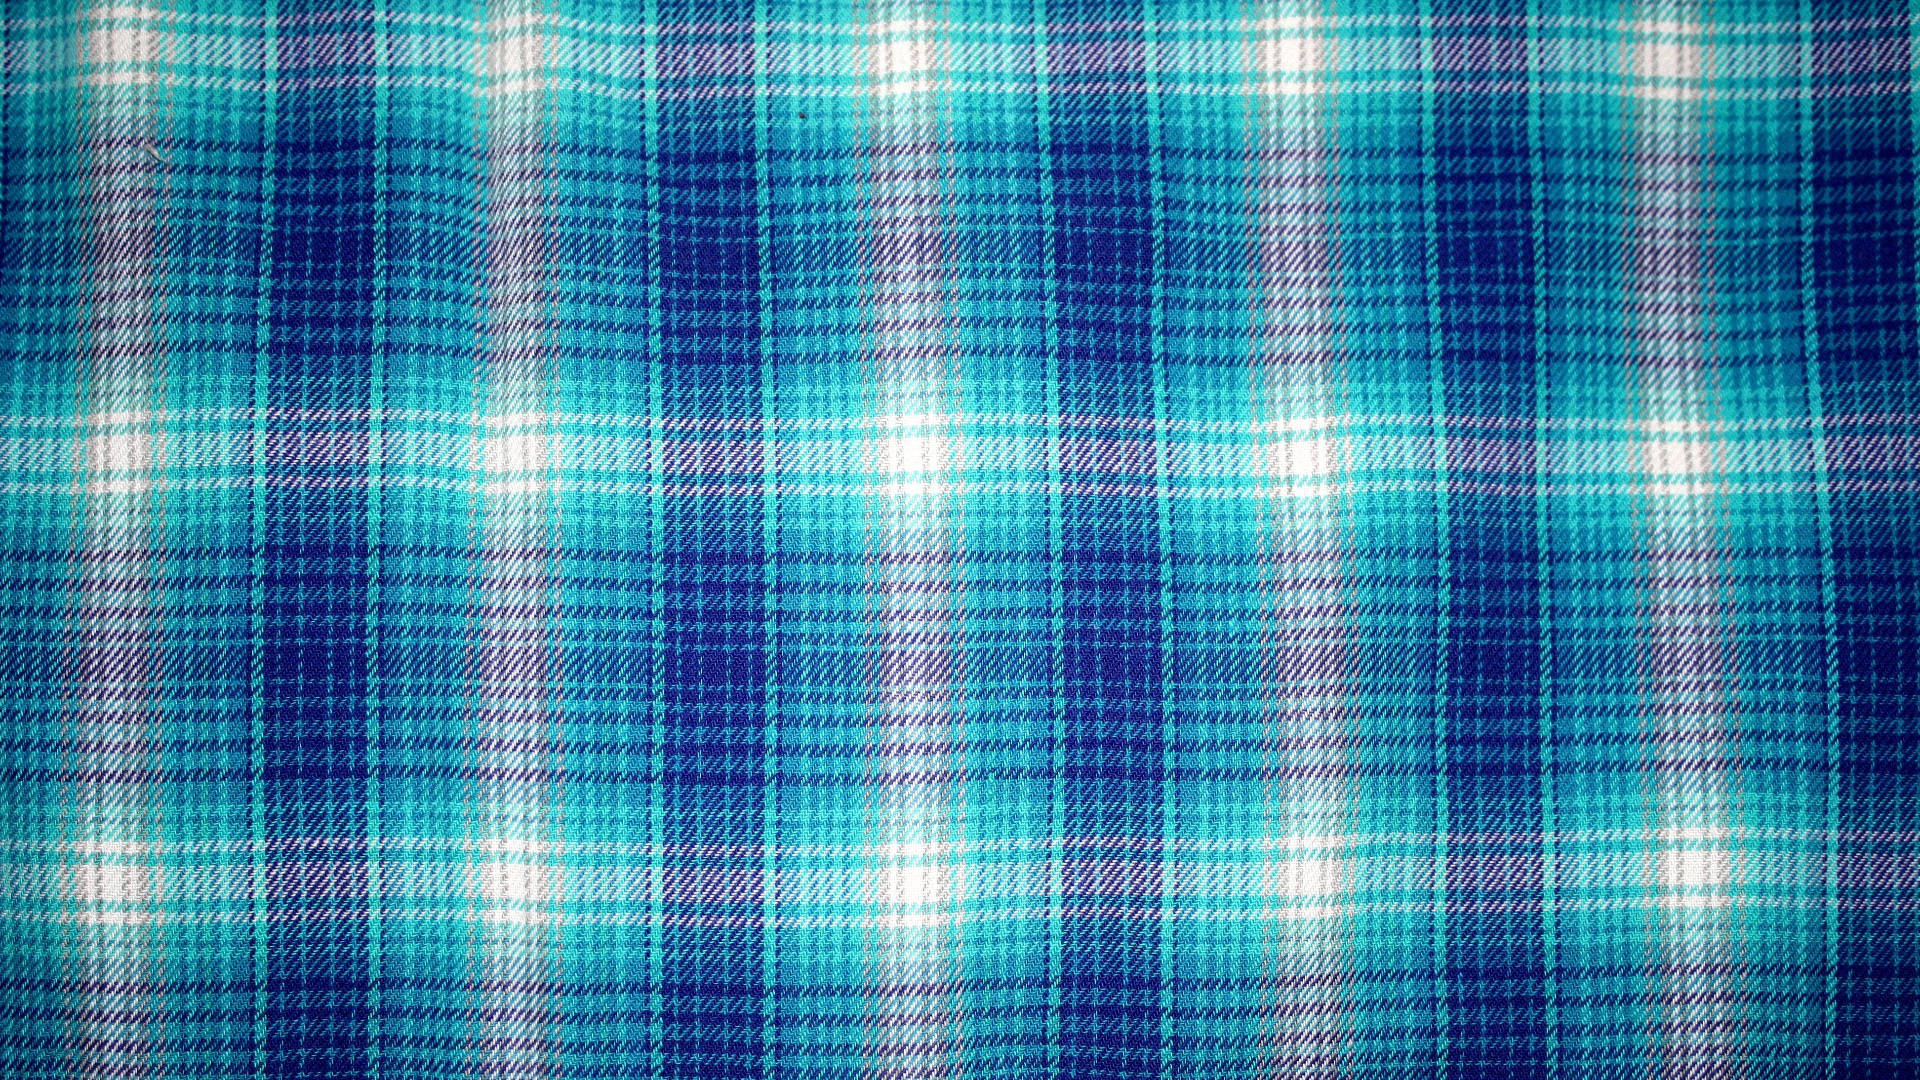 Blue Checkered Plaid Fabric Wallpaper